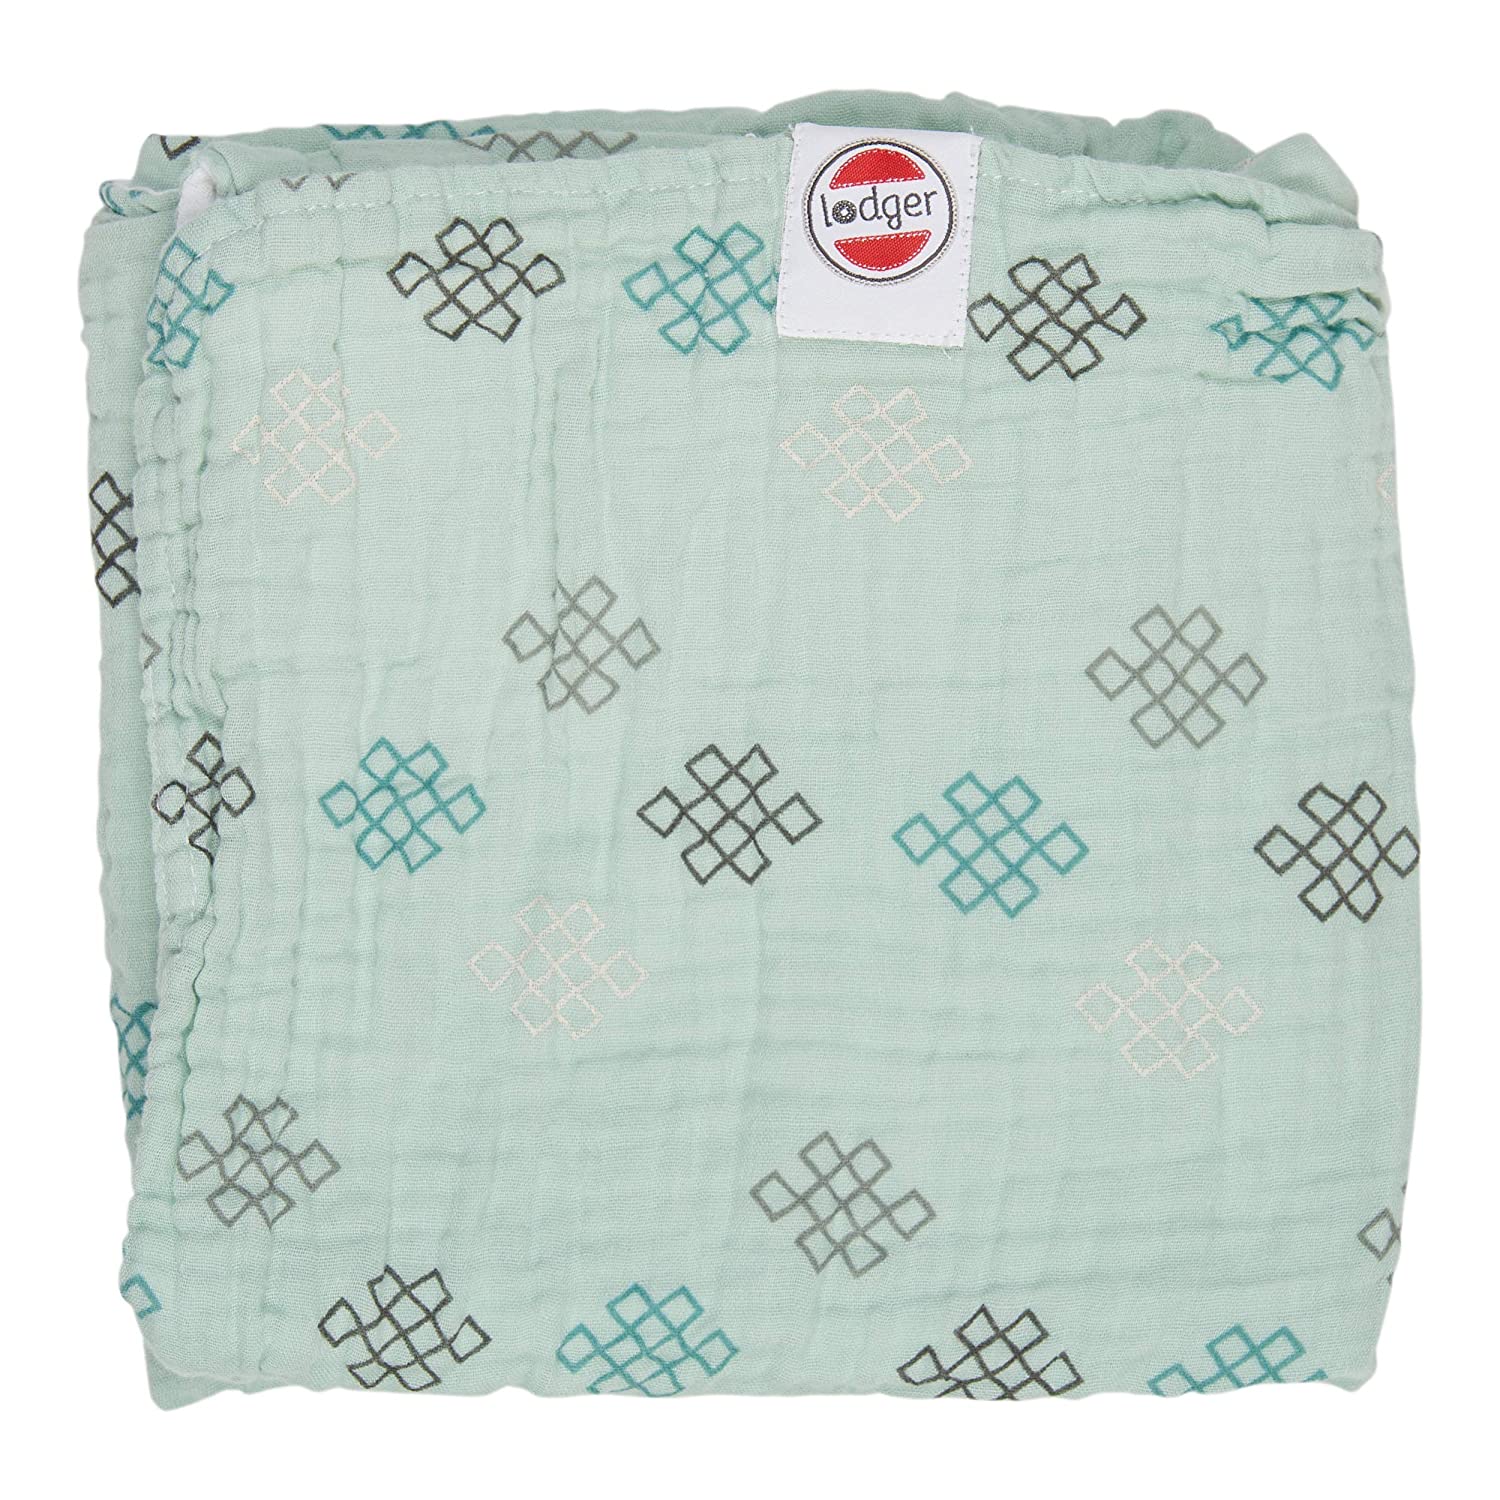 Lodger DM6.7.002 080 120 Baby Blanket Dreamer Xandu Knot 120 x 120 cm Green